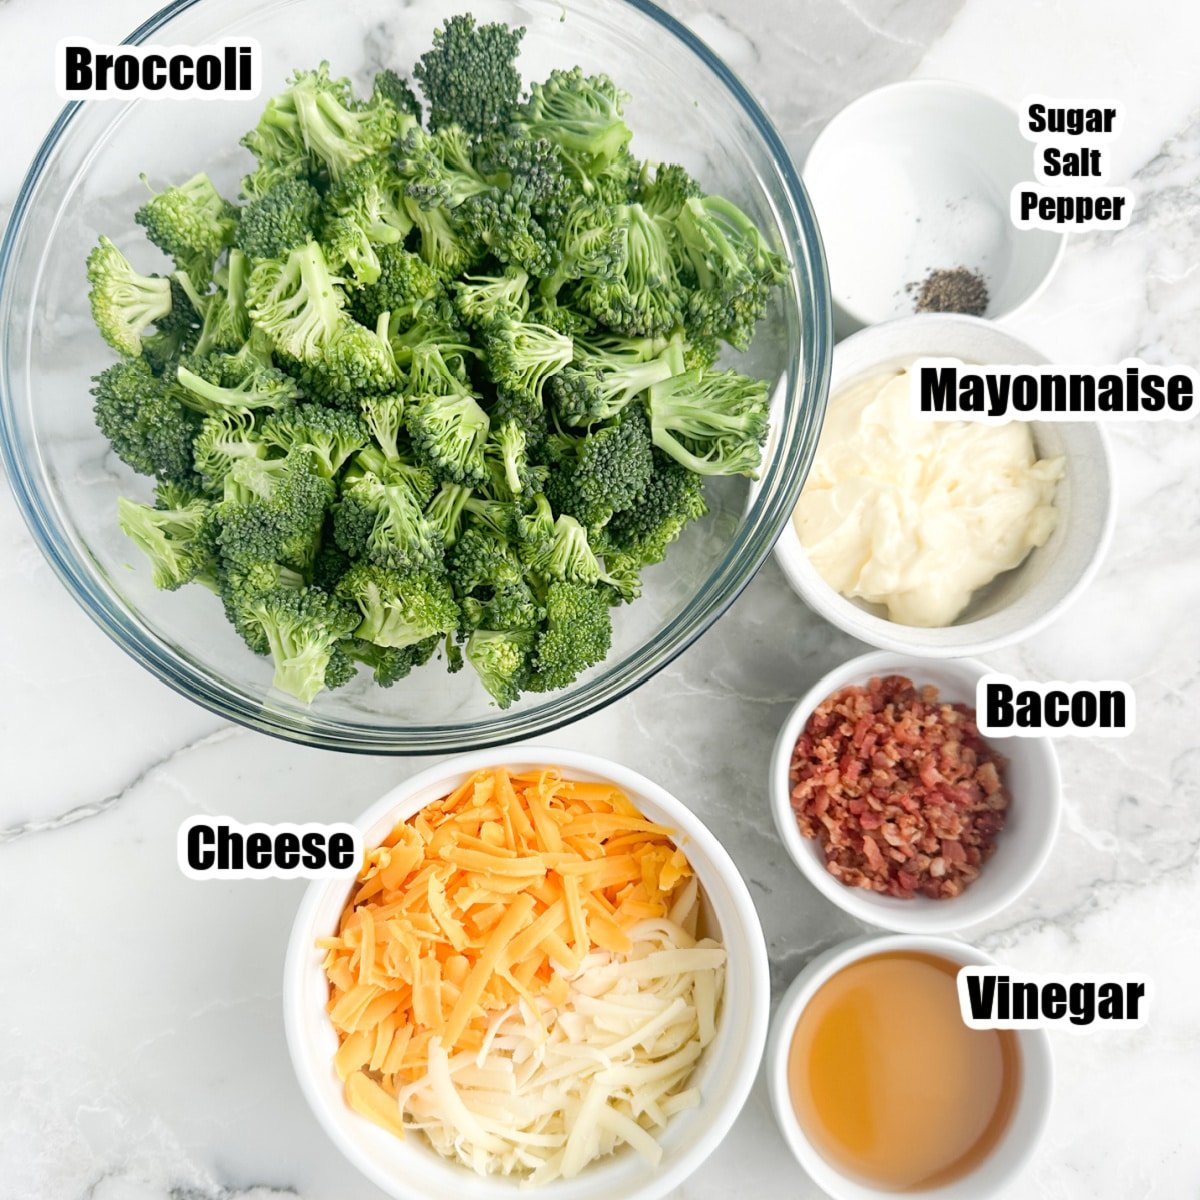 Bowl of broccoli florets, cheese, bacon bits, mayonnaise, and vinegar.